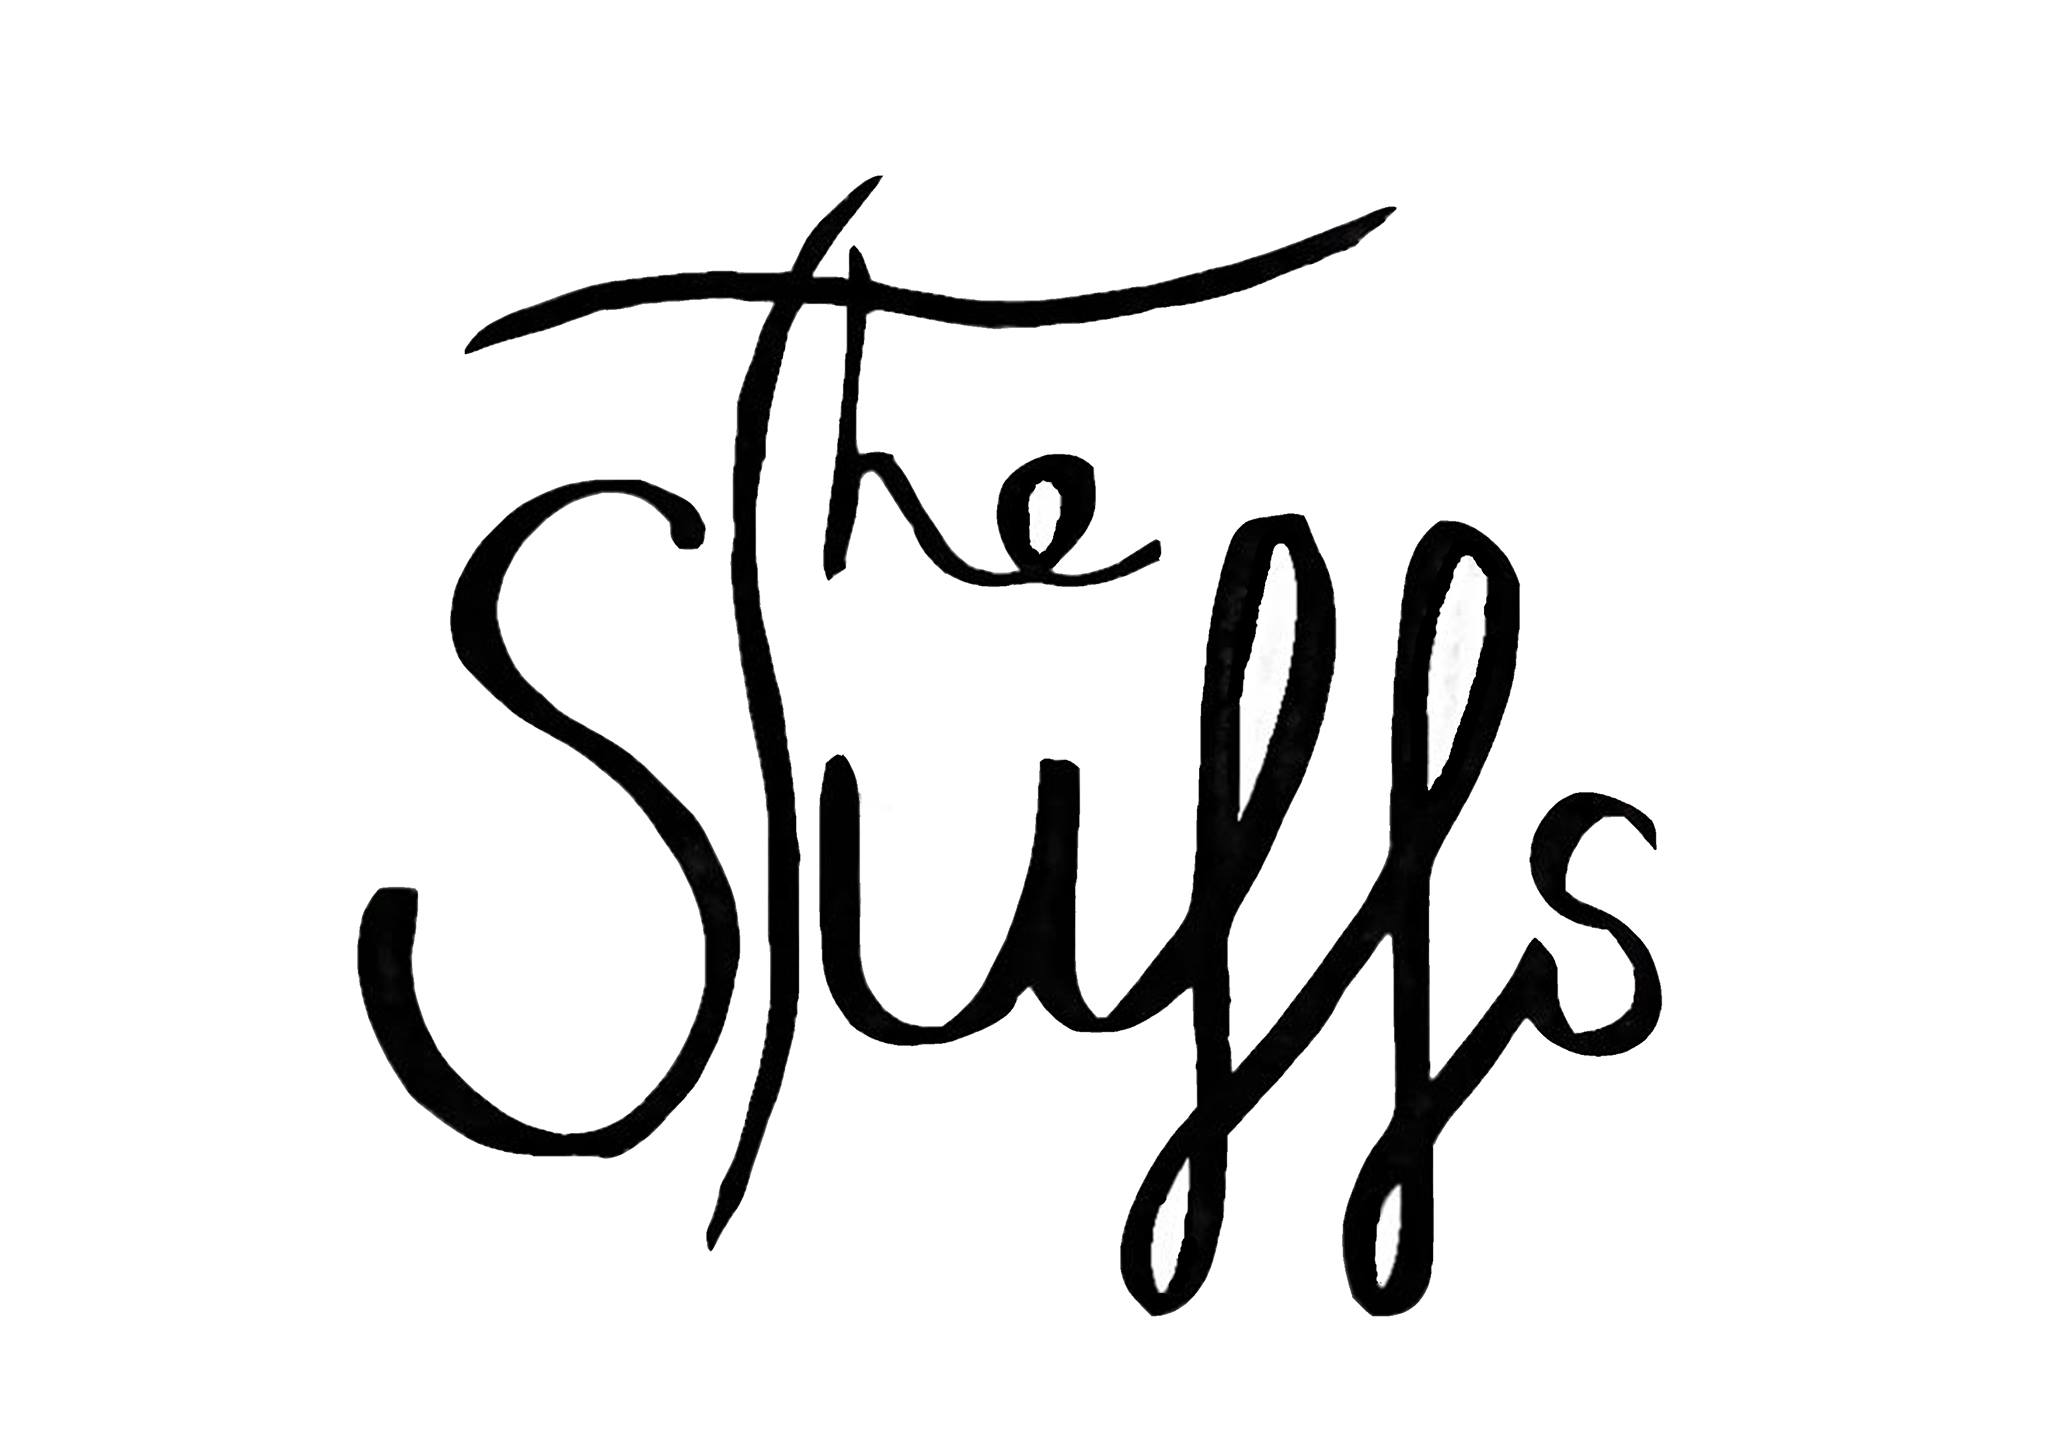 The Stuffs